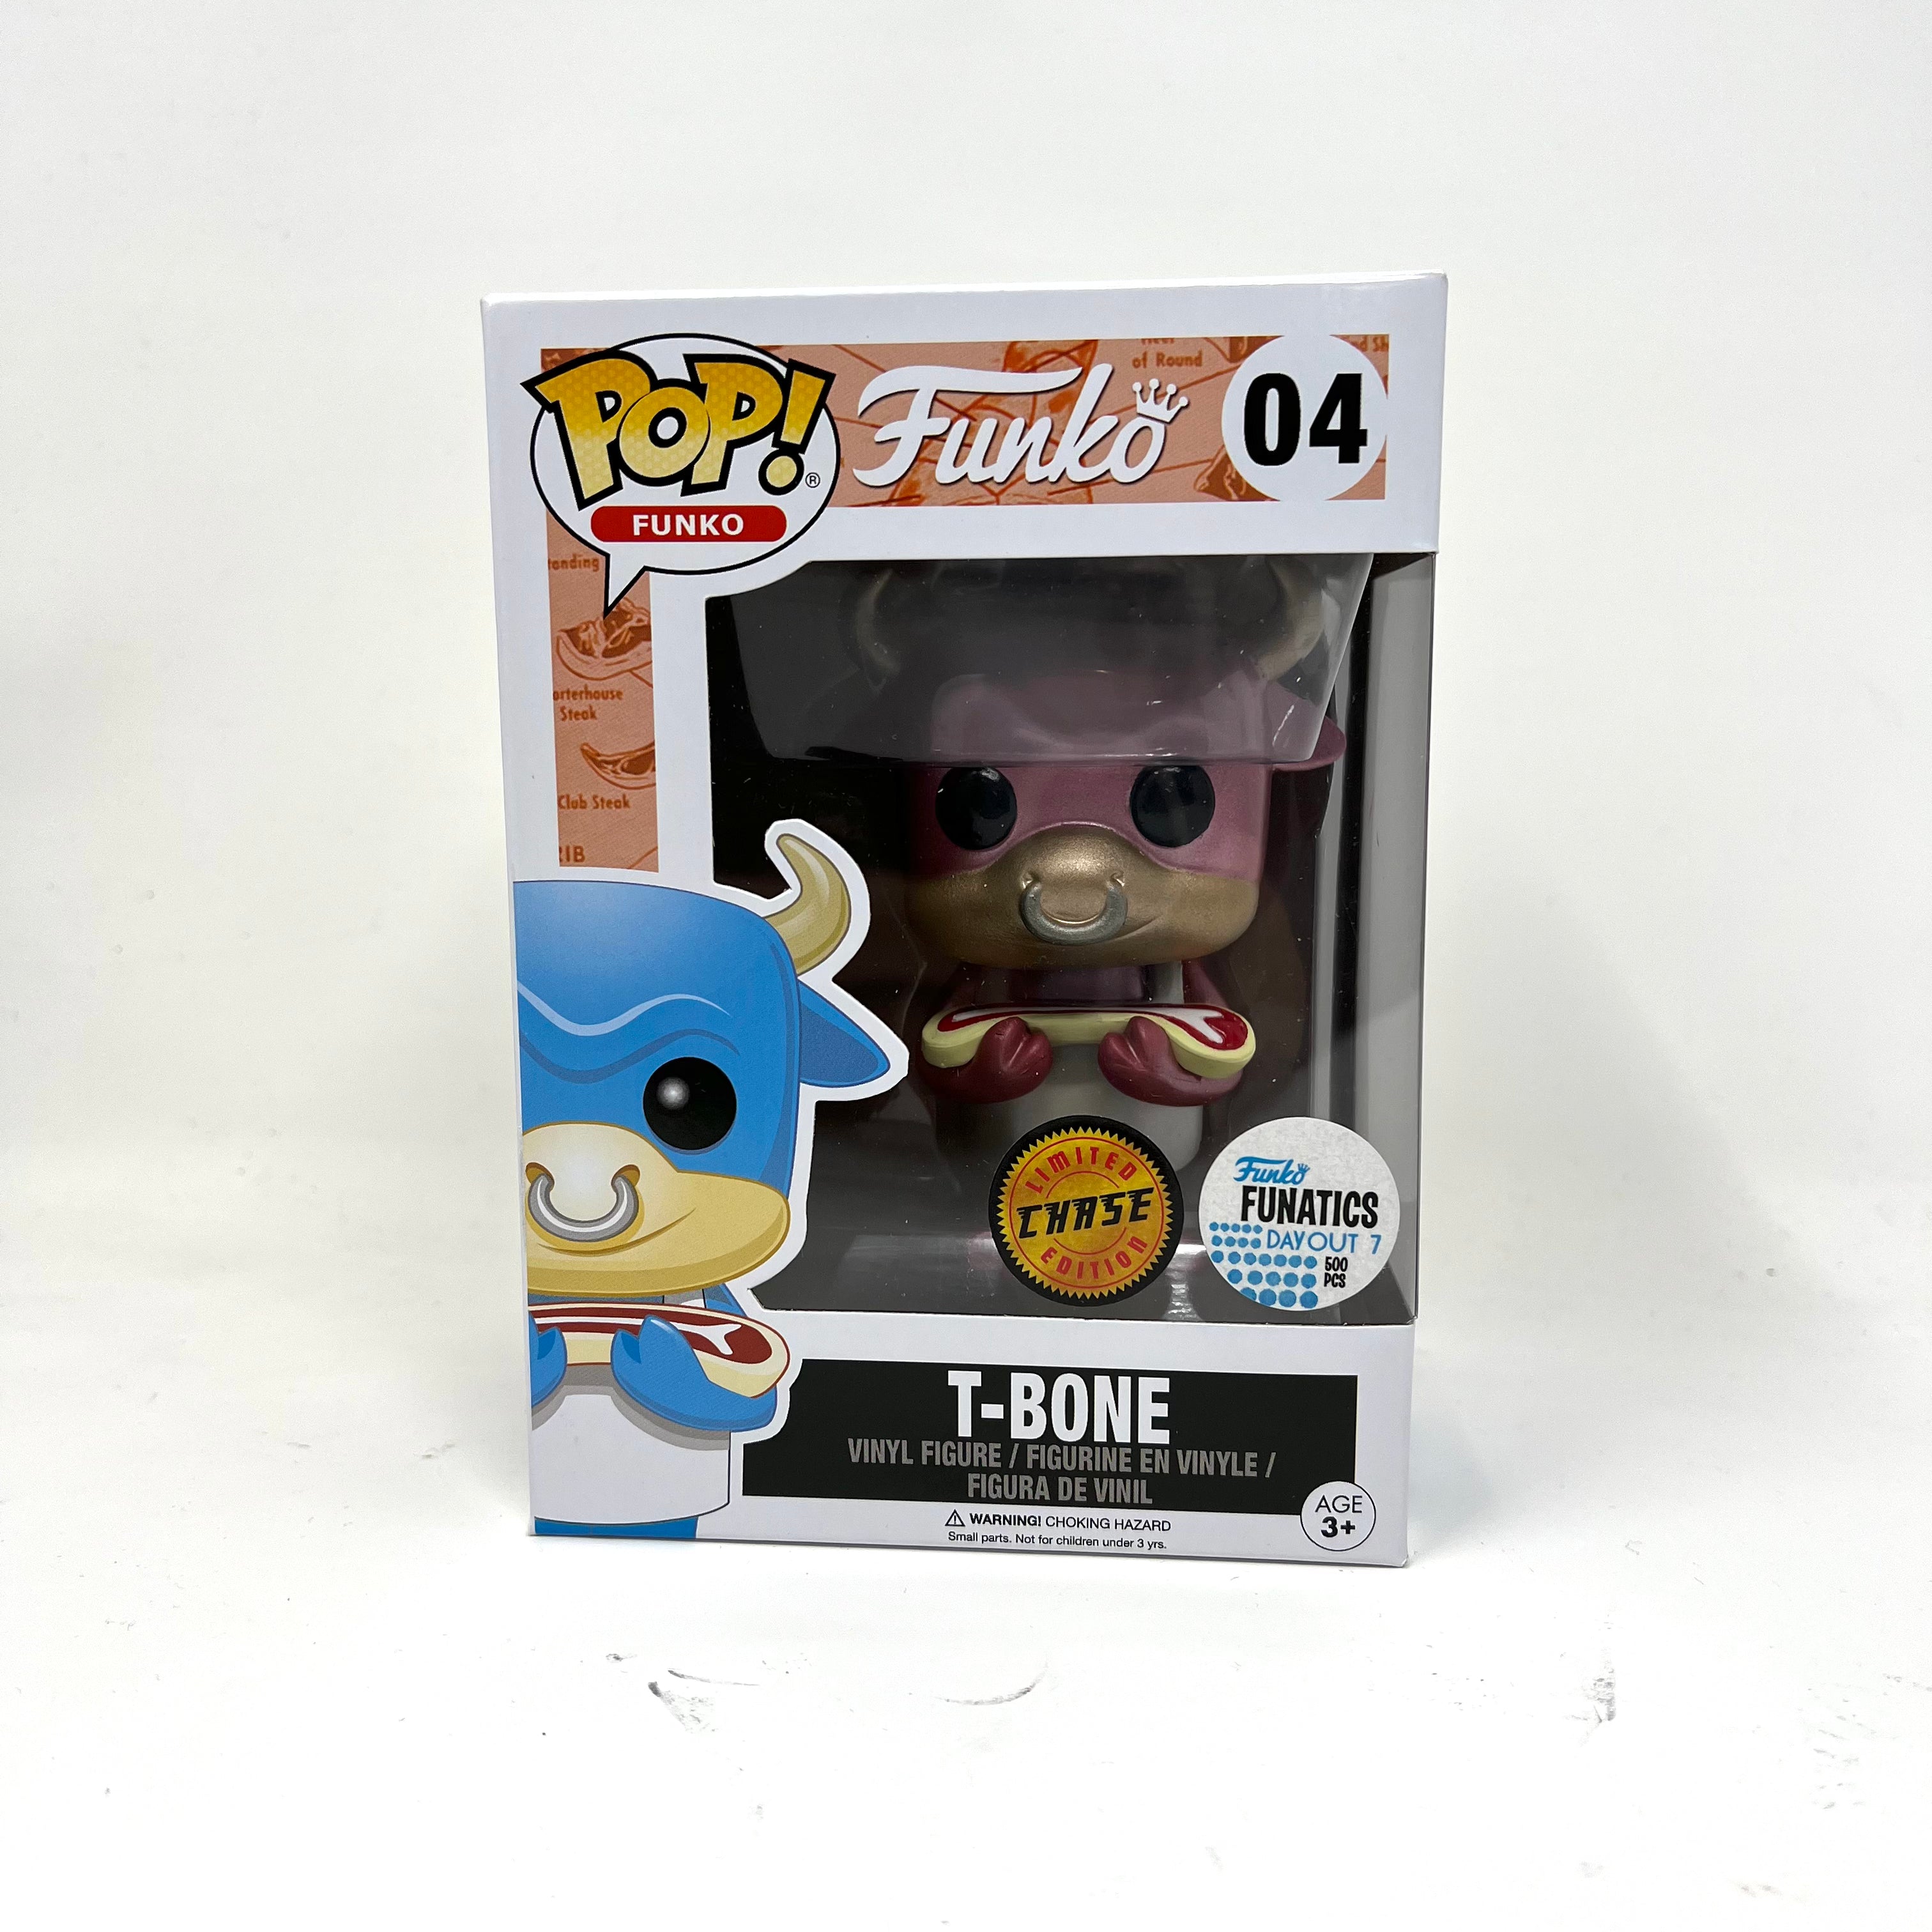 Figurine Pop! Retro Toys Popples Prize Popple (Chase) - N° 02 - Funko